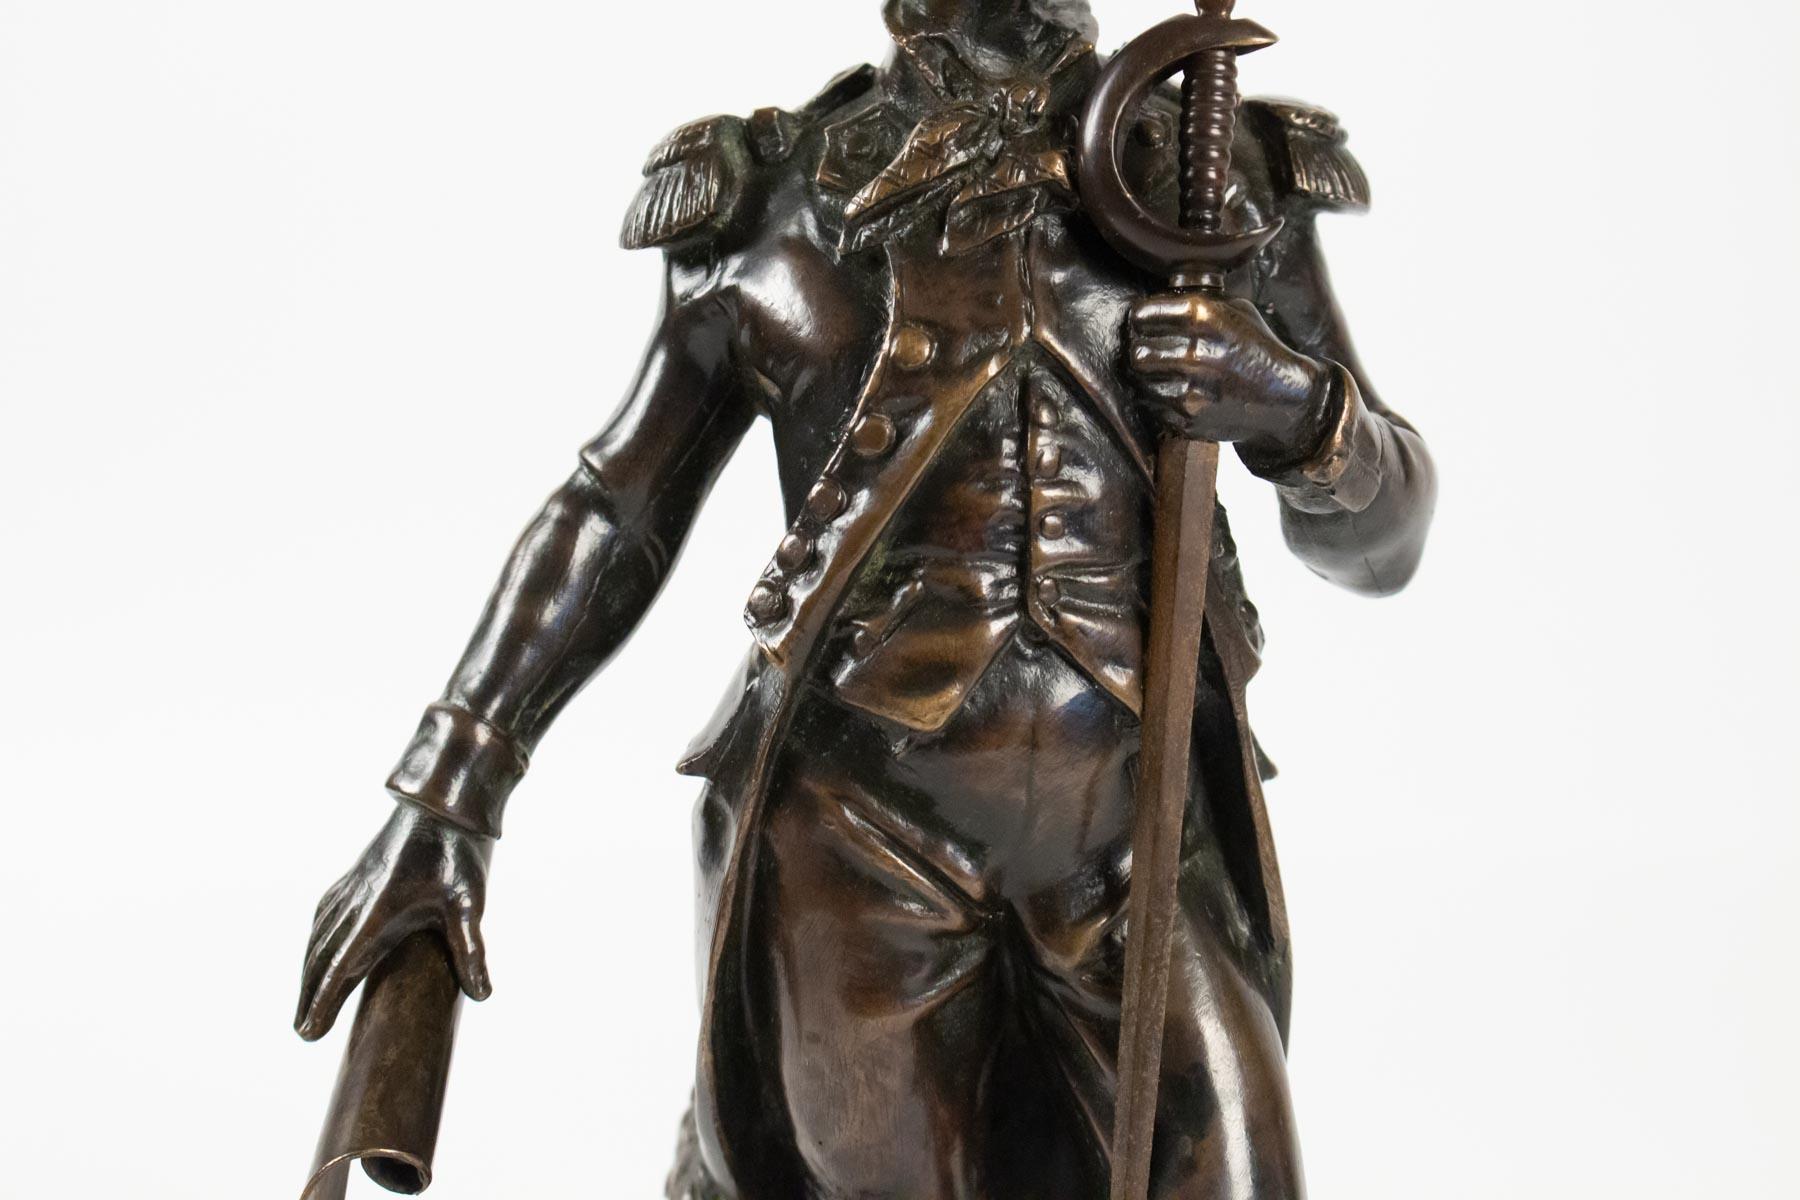 Napoleon III Bronze Sculpture Representing A Military Leader, 19th Century, Antiquity